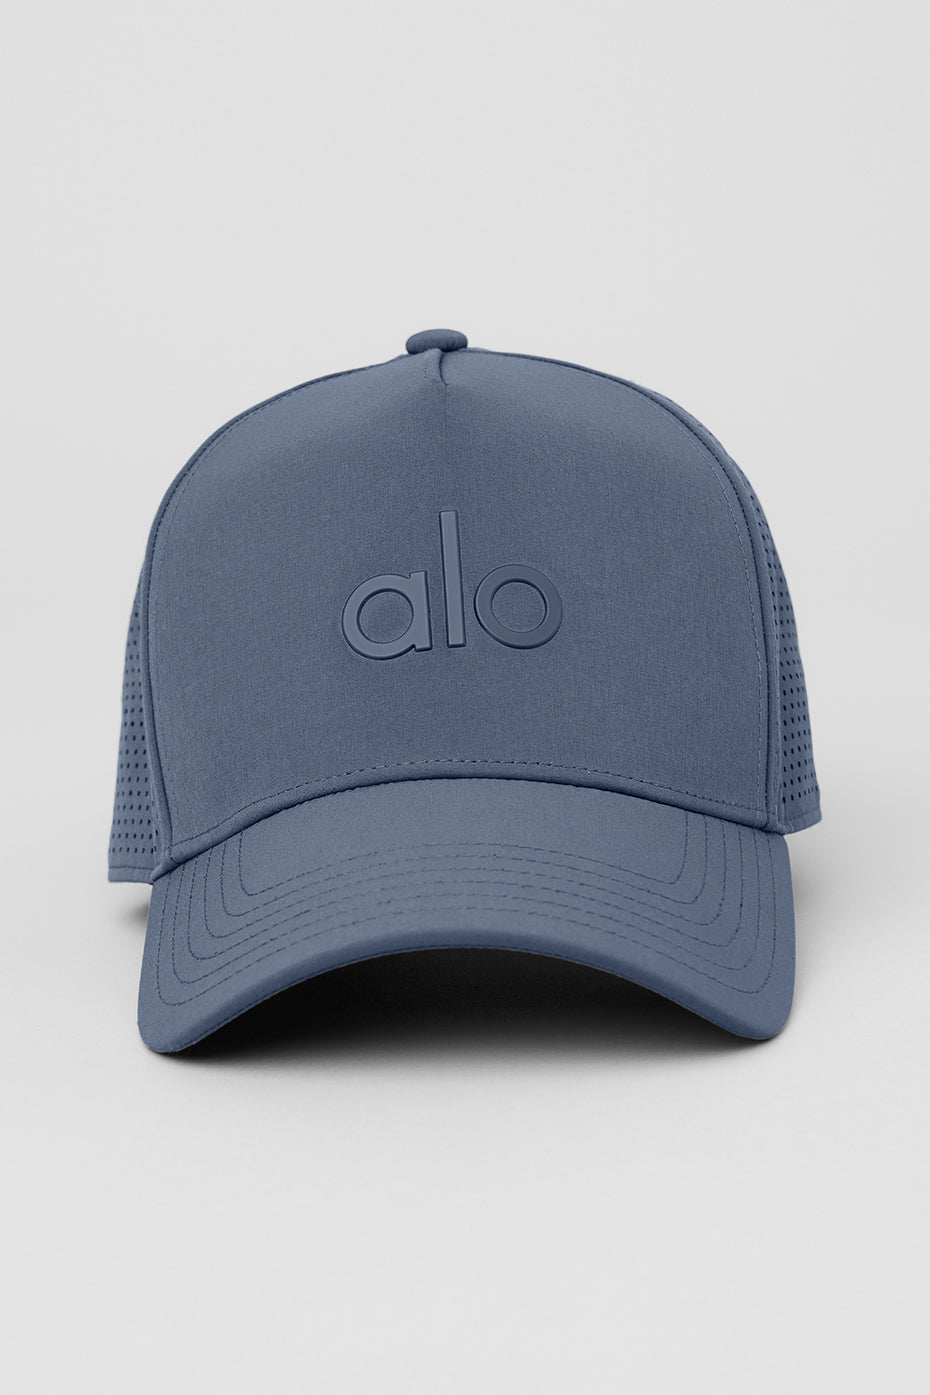 Alo Yoga Alo District Trucker Hat Black - $25 (28% Off Retail) - From  Mackenzie